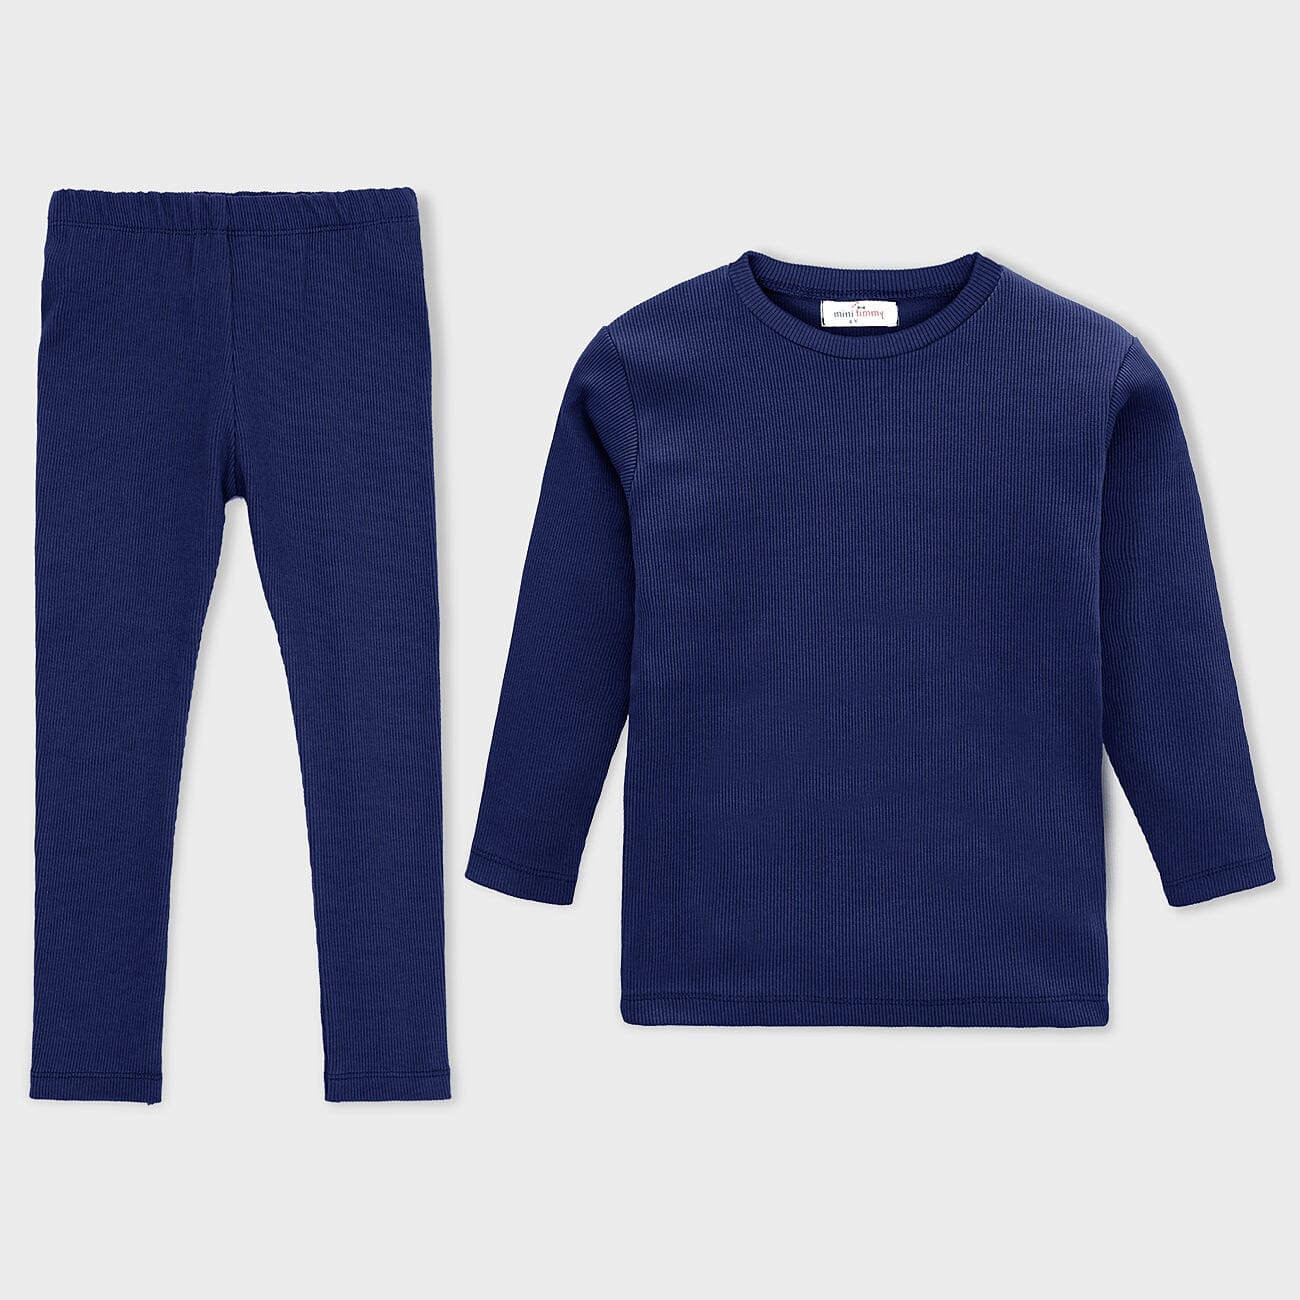 Premium Quality Blue 2-Piece Winter Inner Suit For Kids (120930)